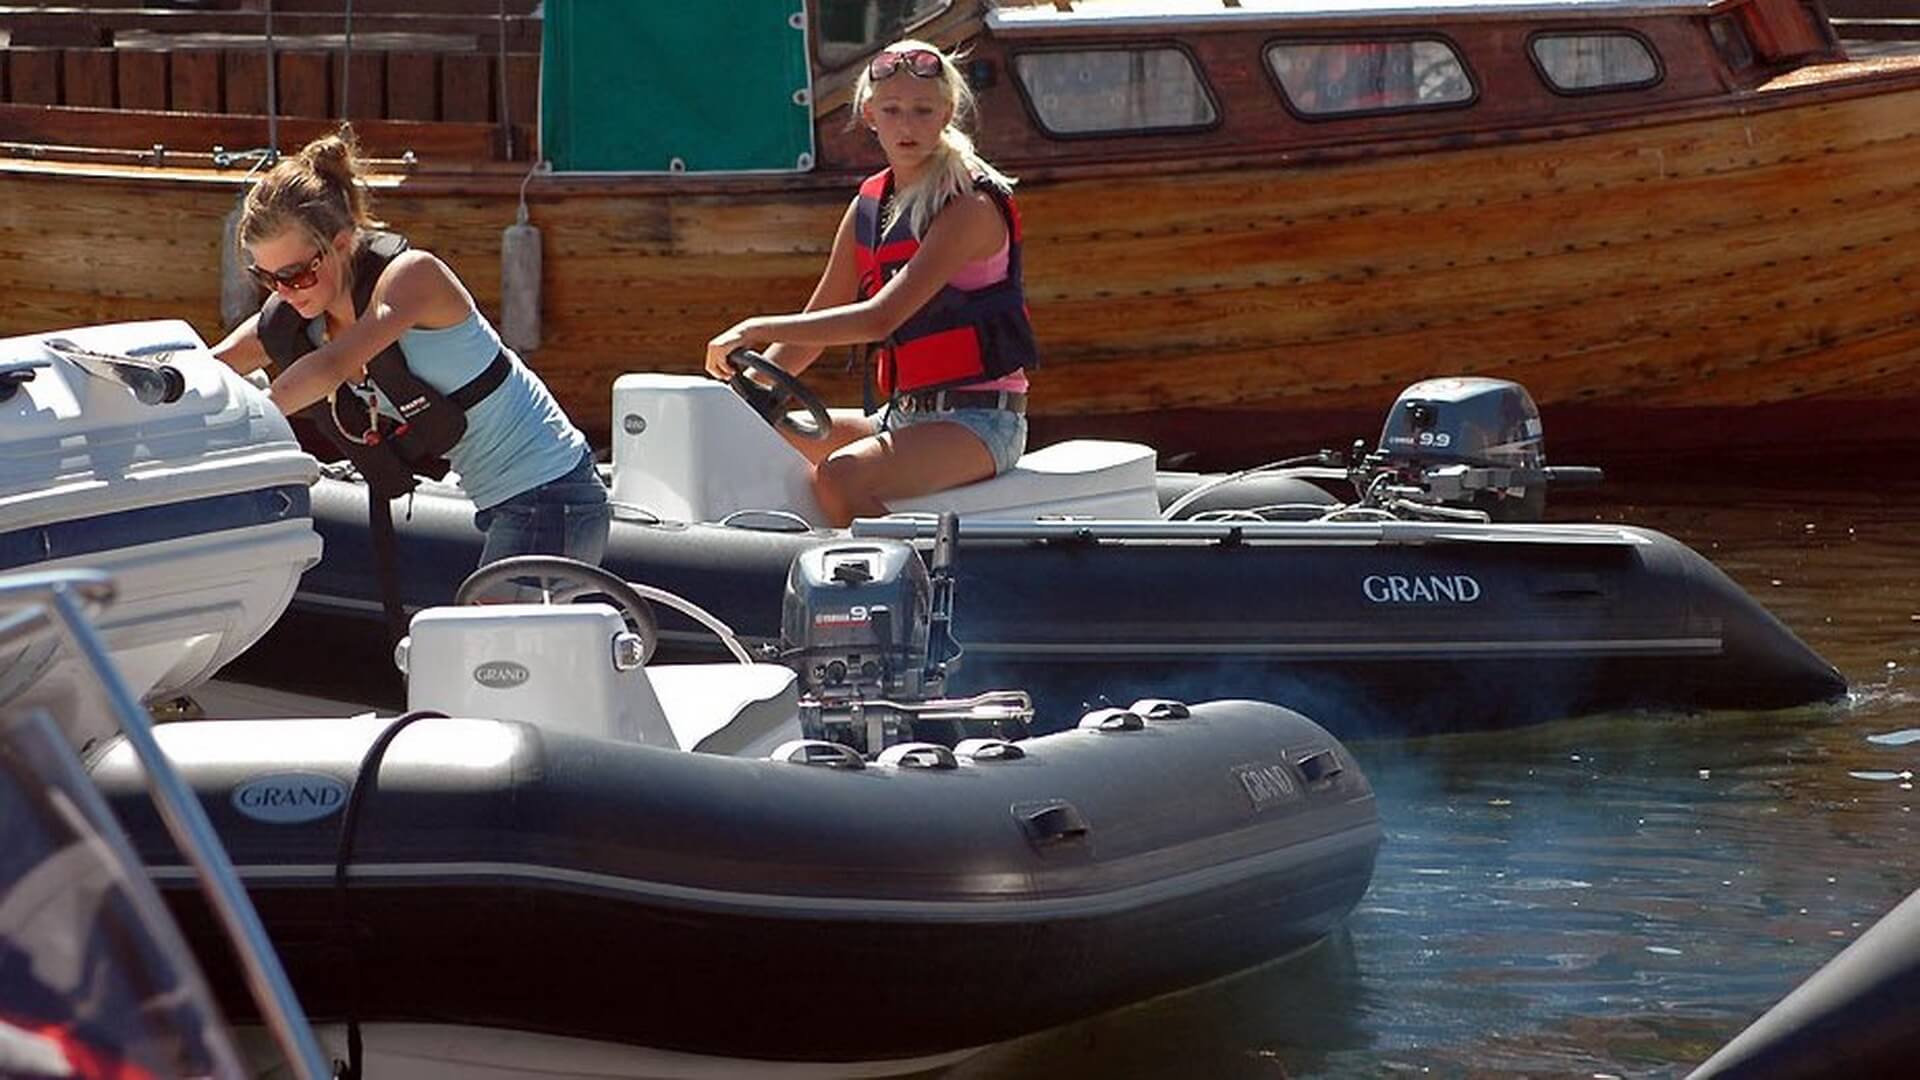 Надувная лодка с жестким дном GRAND Silver Line S330s,Надувная лодка GRAND Silver Line S330S, GRAND Silver Line S330S, GRAND Silver Line S330SF, GRAND S330S, GRAND S330SF, GRAND S330, Надувная лодка GRAND, Надувная лодка ГРАНД, Надувная лодка с жестким дном, RIB, Rigid Inflatable Boats